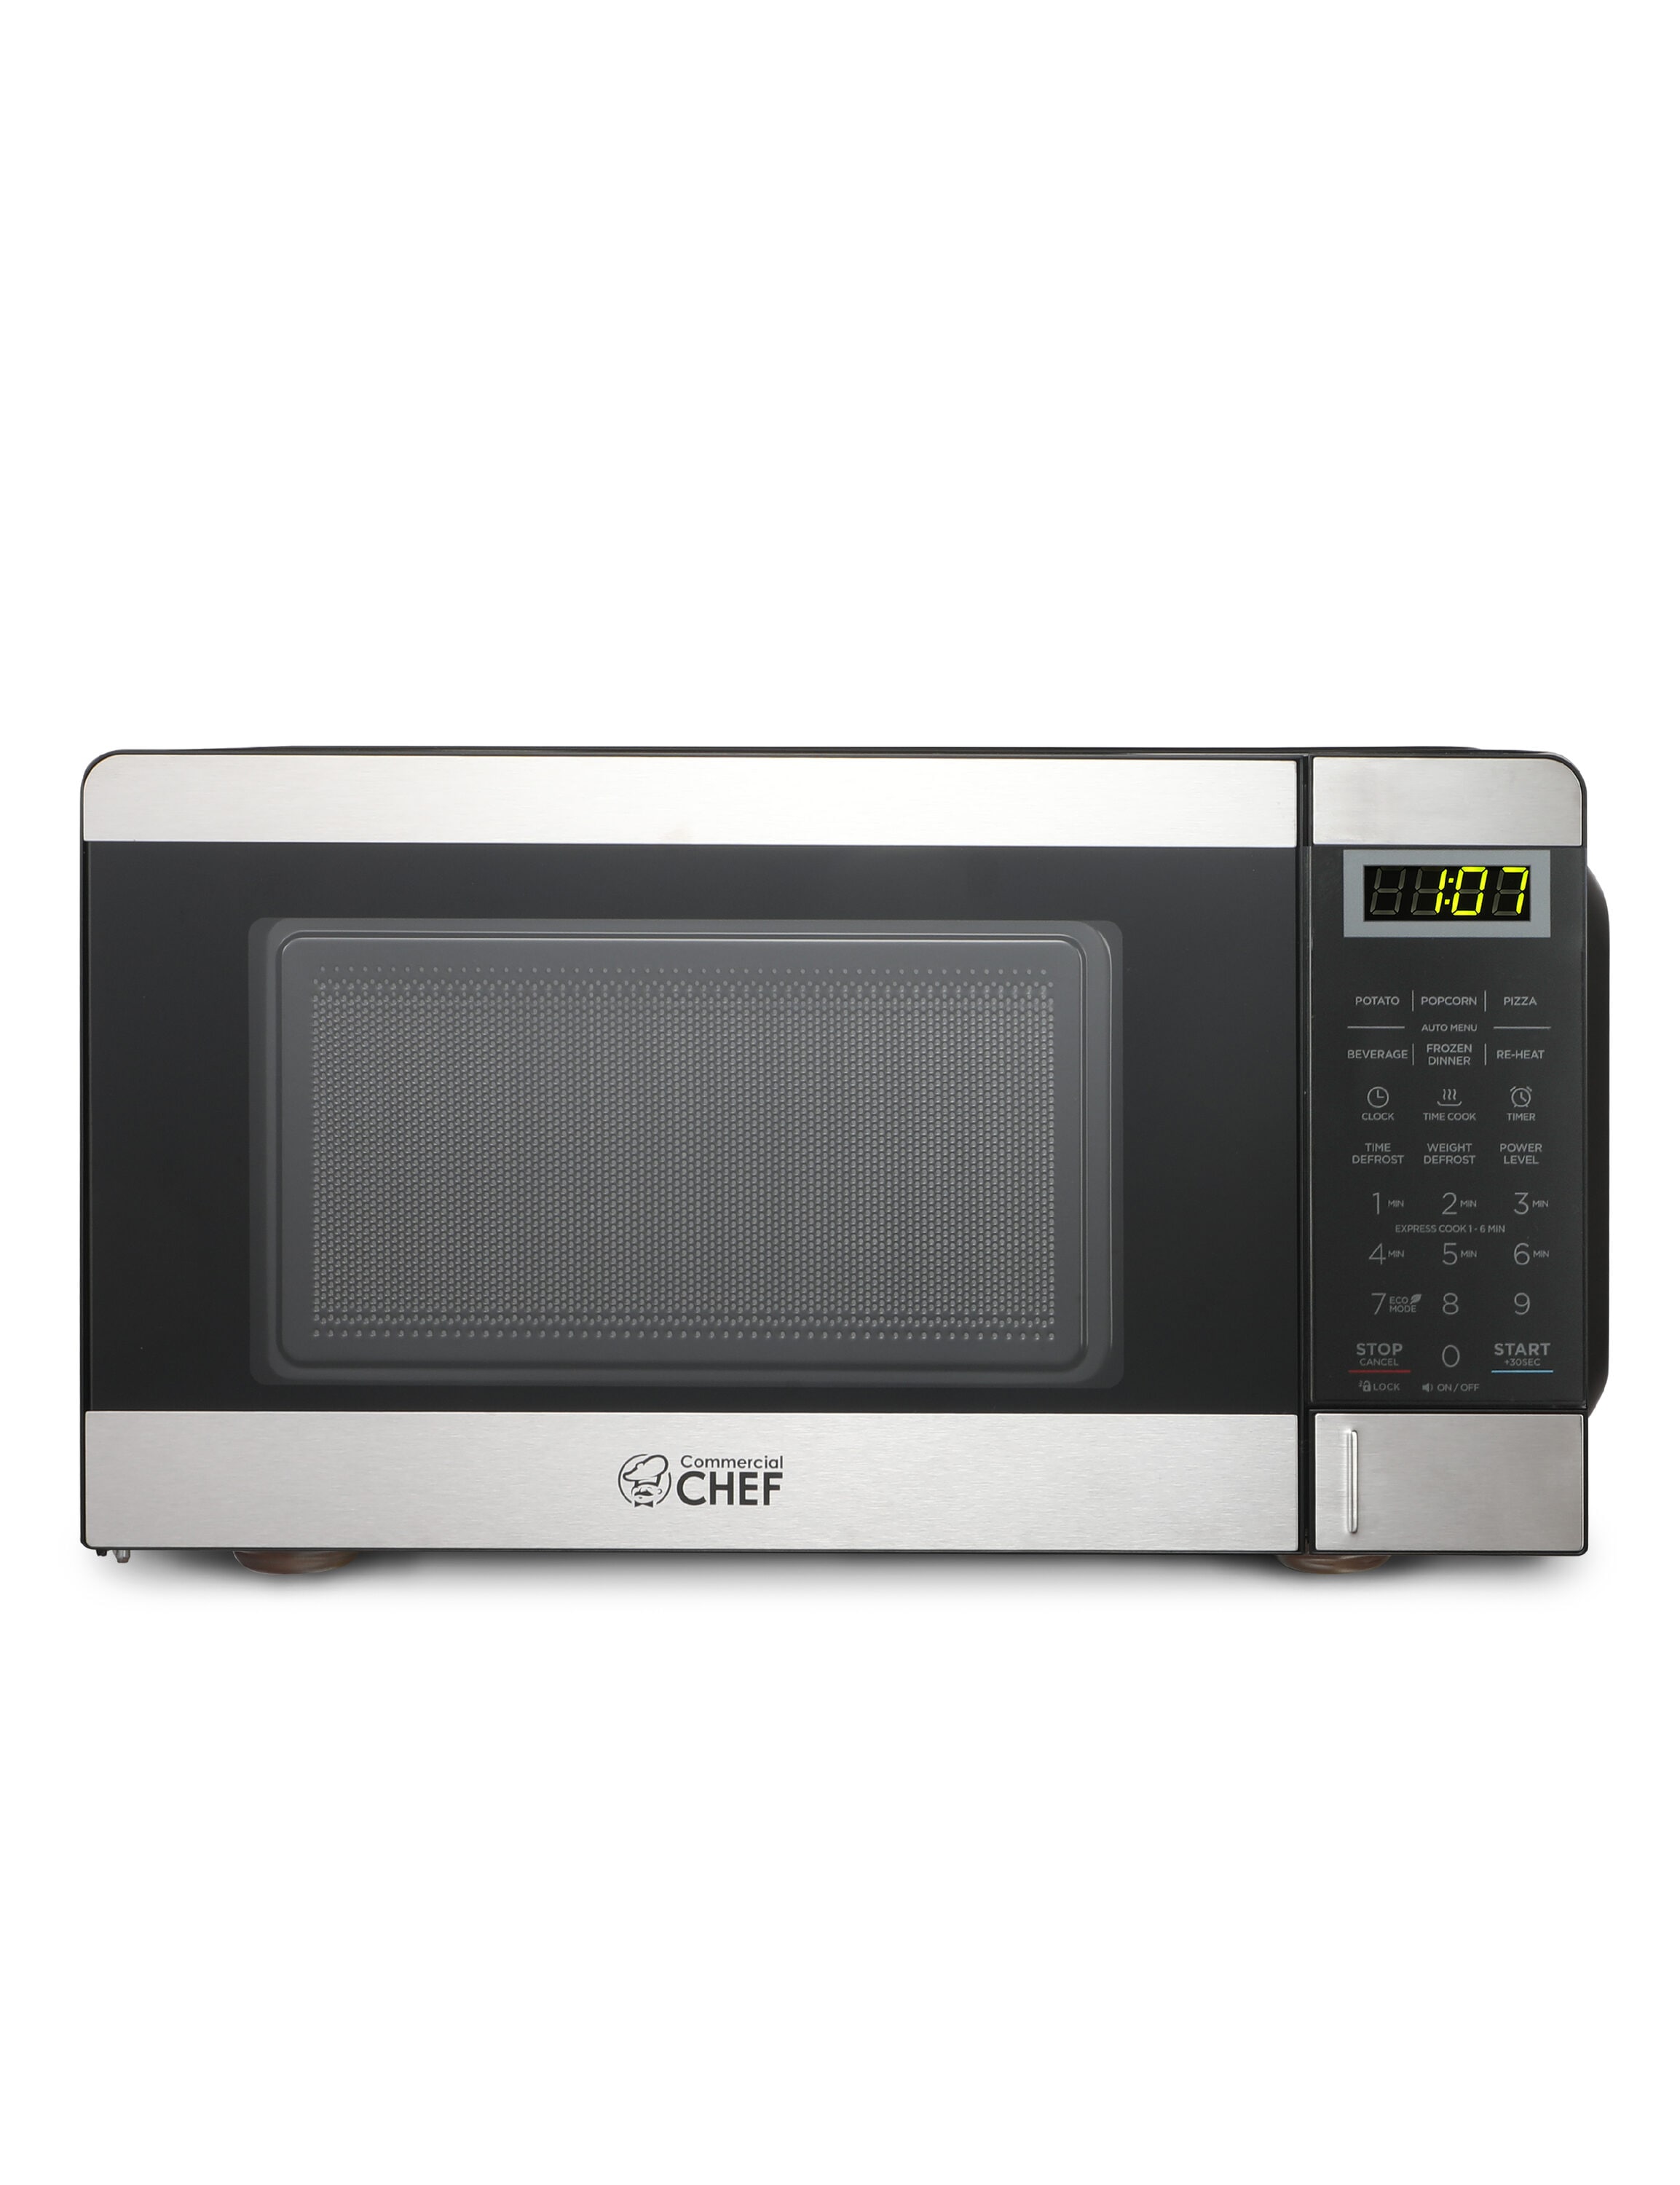 0.7 CU. FT. 700 Watt Countertop Microwave Oven, Stainless Steel